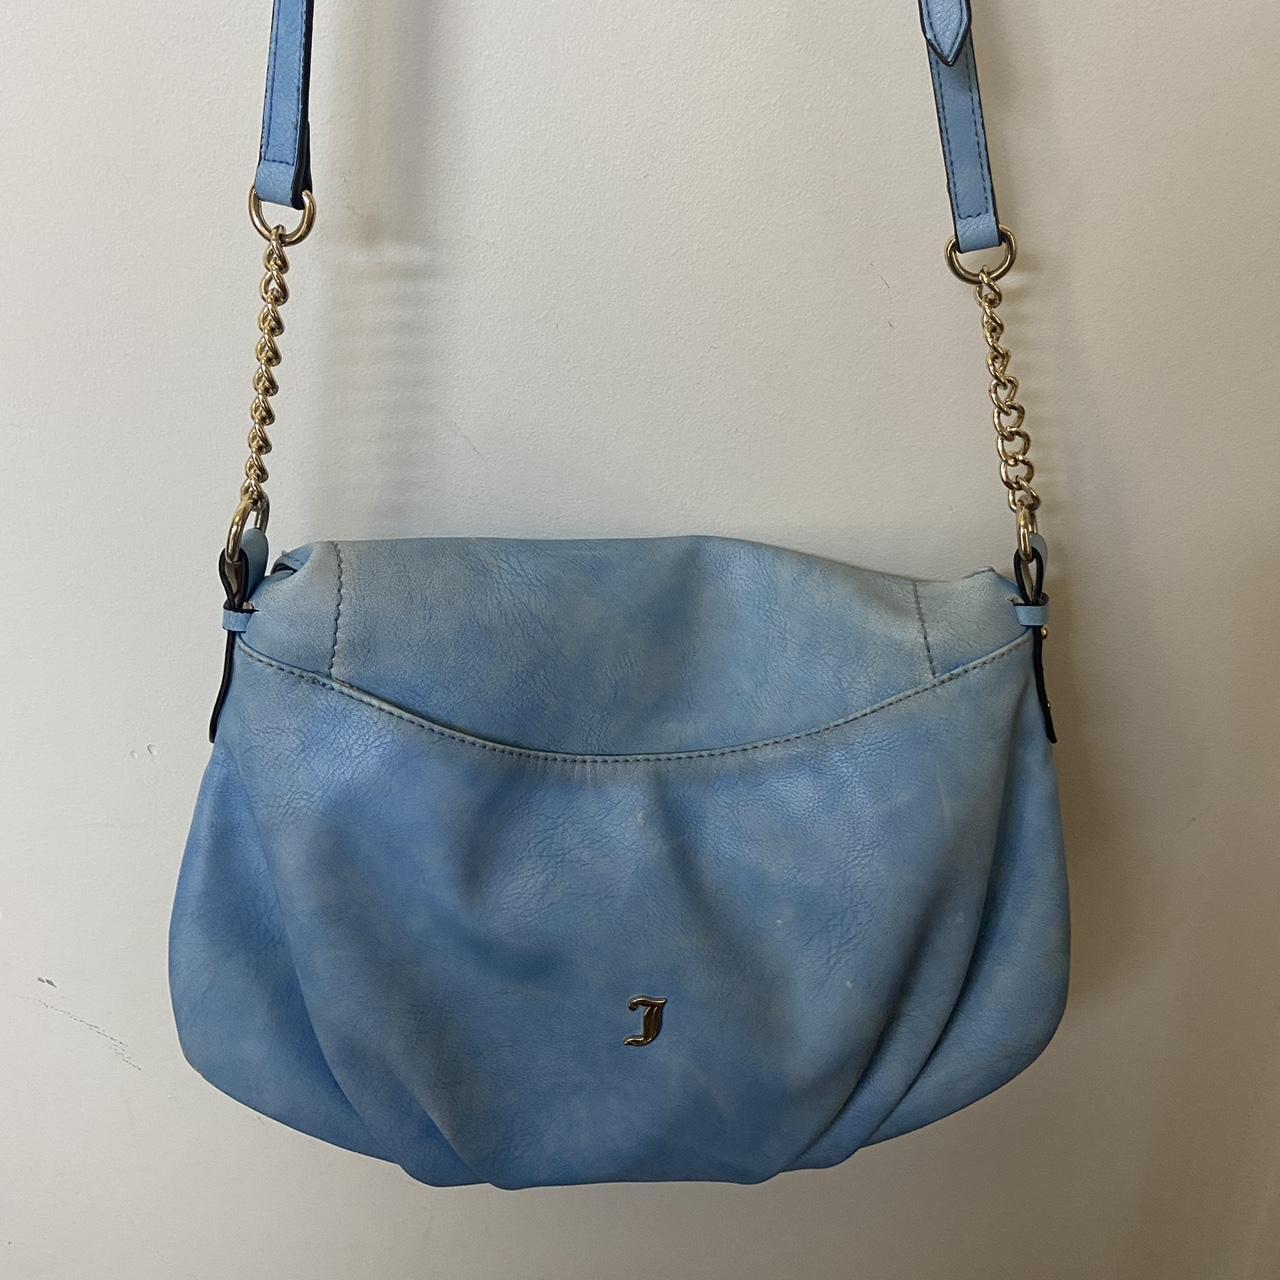 Juicy Couture Purse Be Classic Shoulder Bag - Blue - Juicy Couture bag - |  Fash Brands